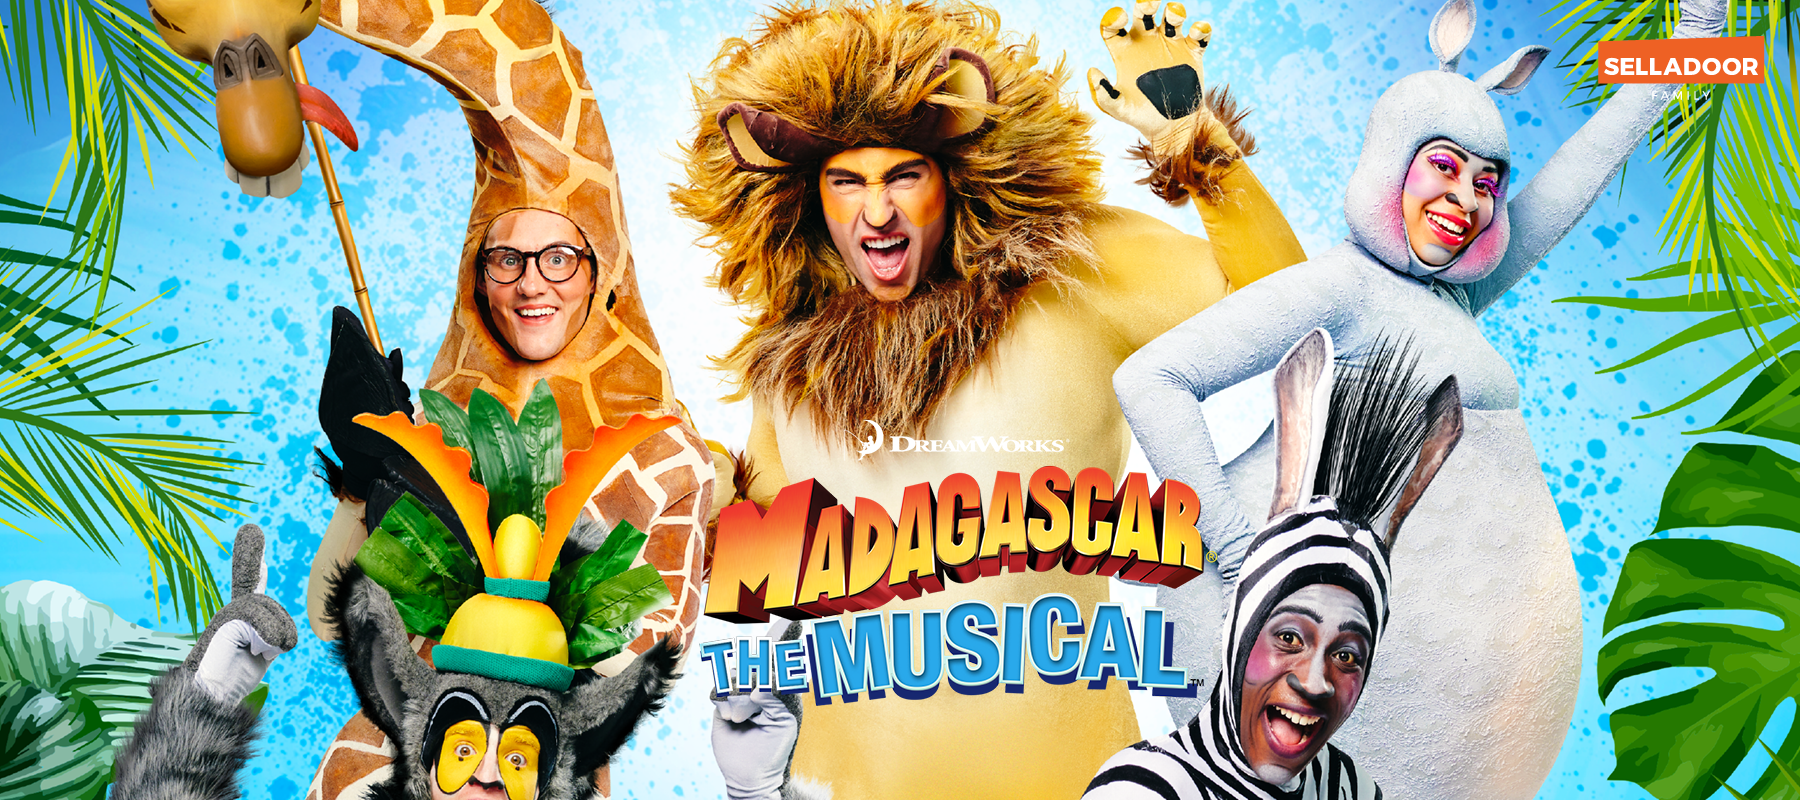 POSTPONED: Madagascar The Musical